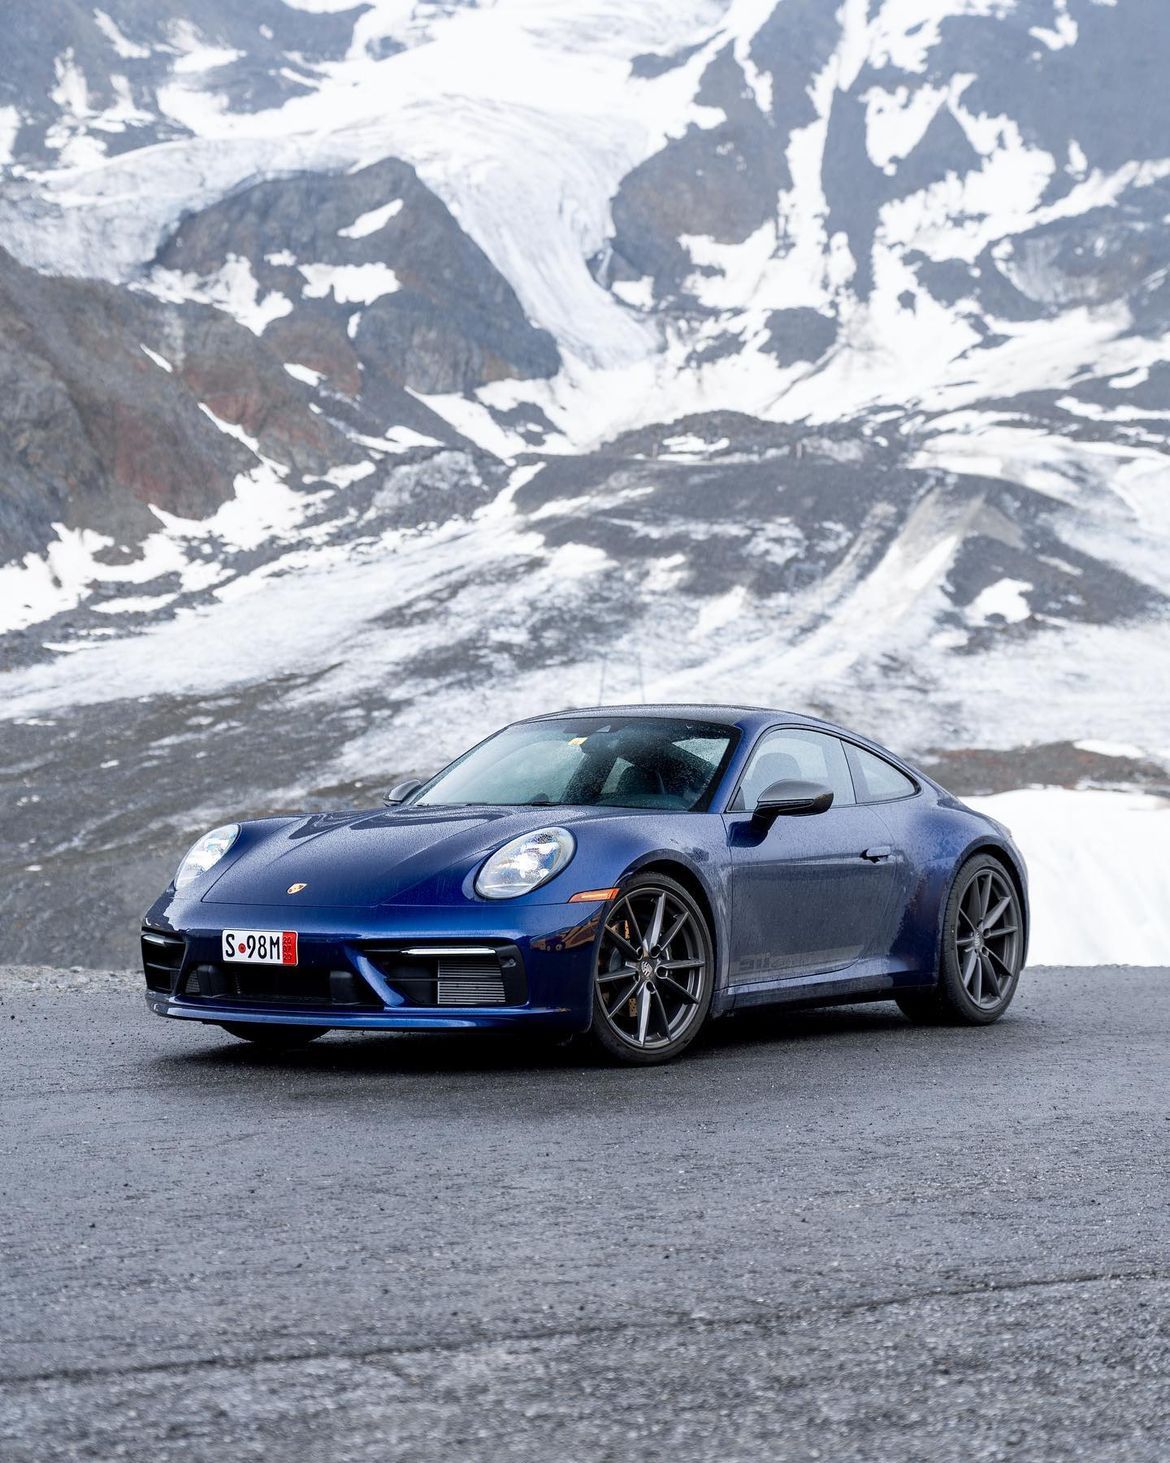 Porsche European Delivery - Kaunertal Glacier Road